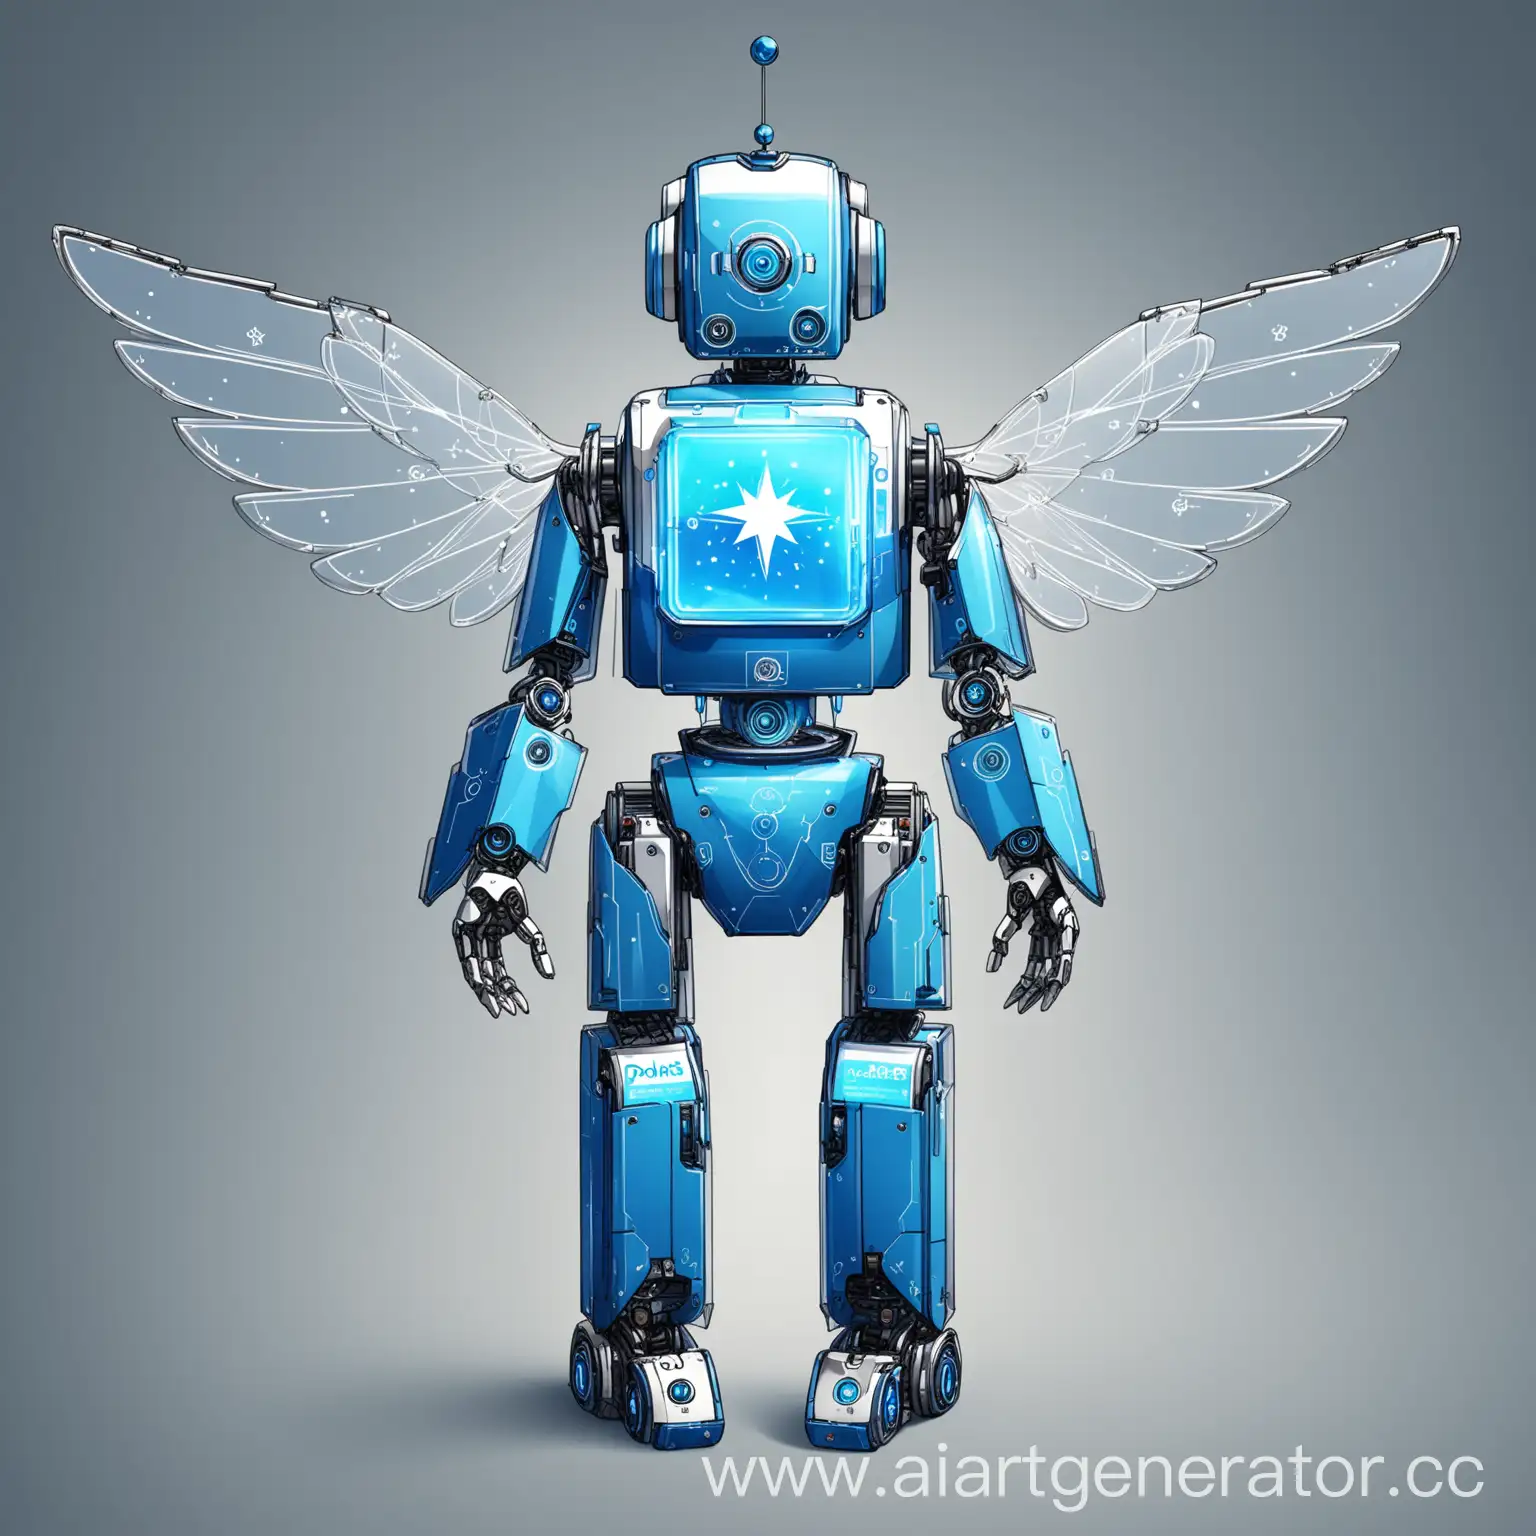 Futuristic-Robot-with-Polaris-Logo-and-Transparent-Wings